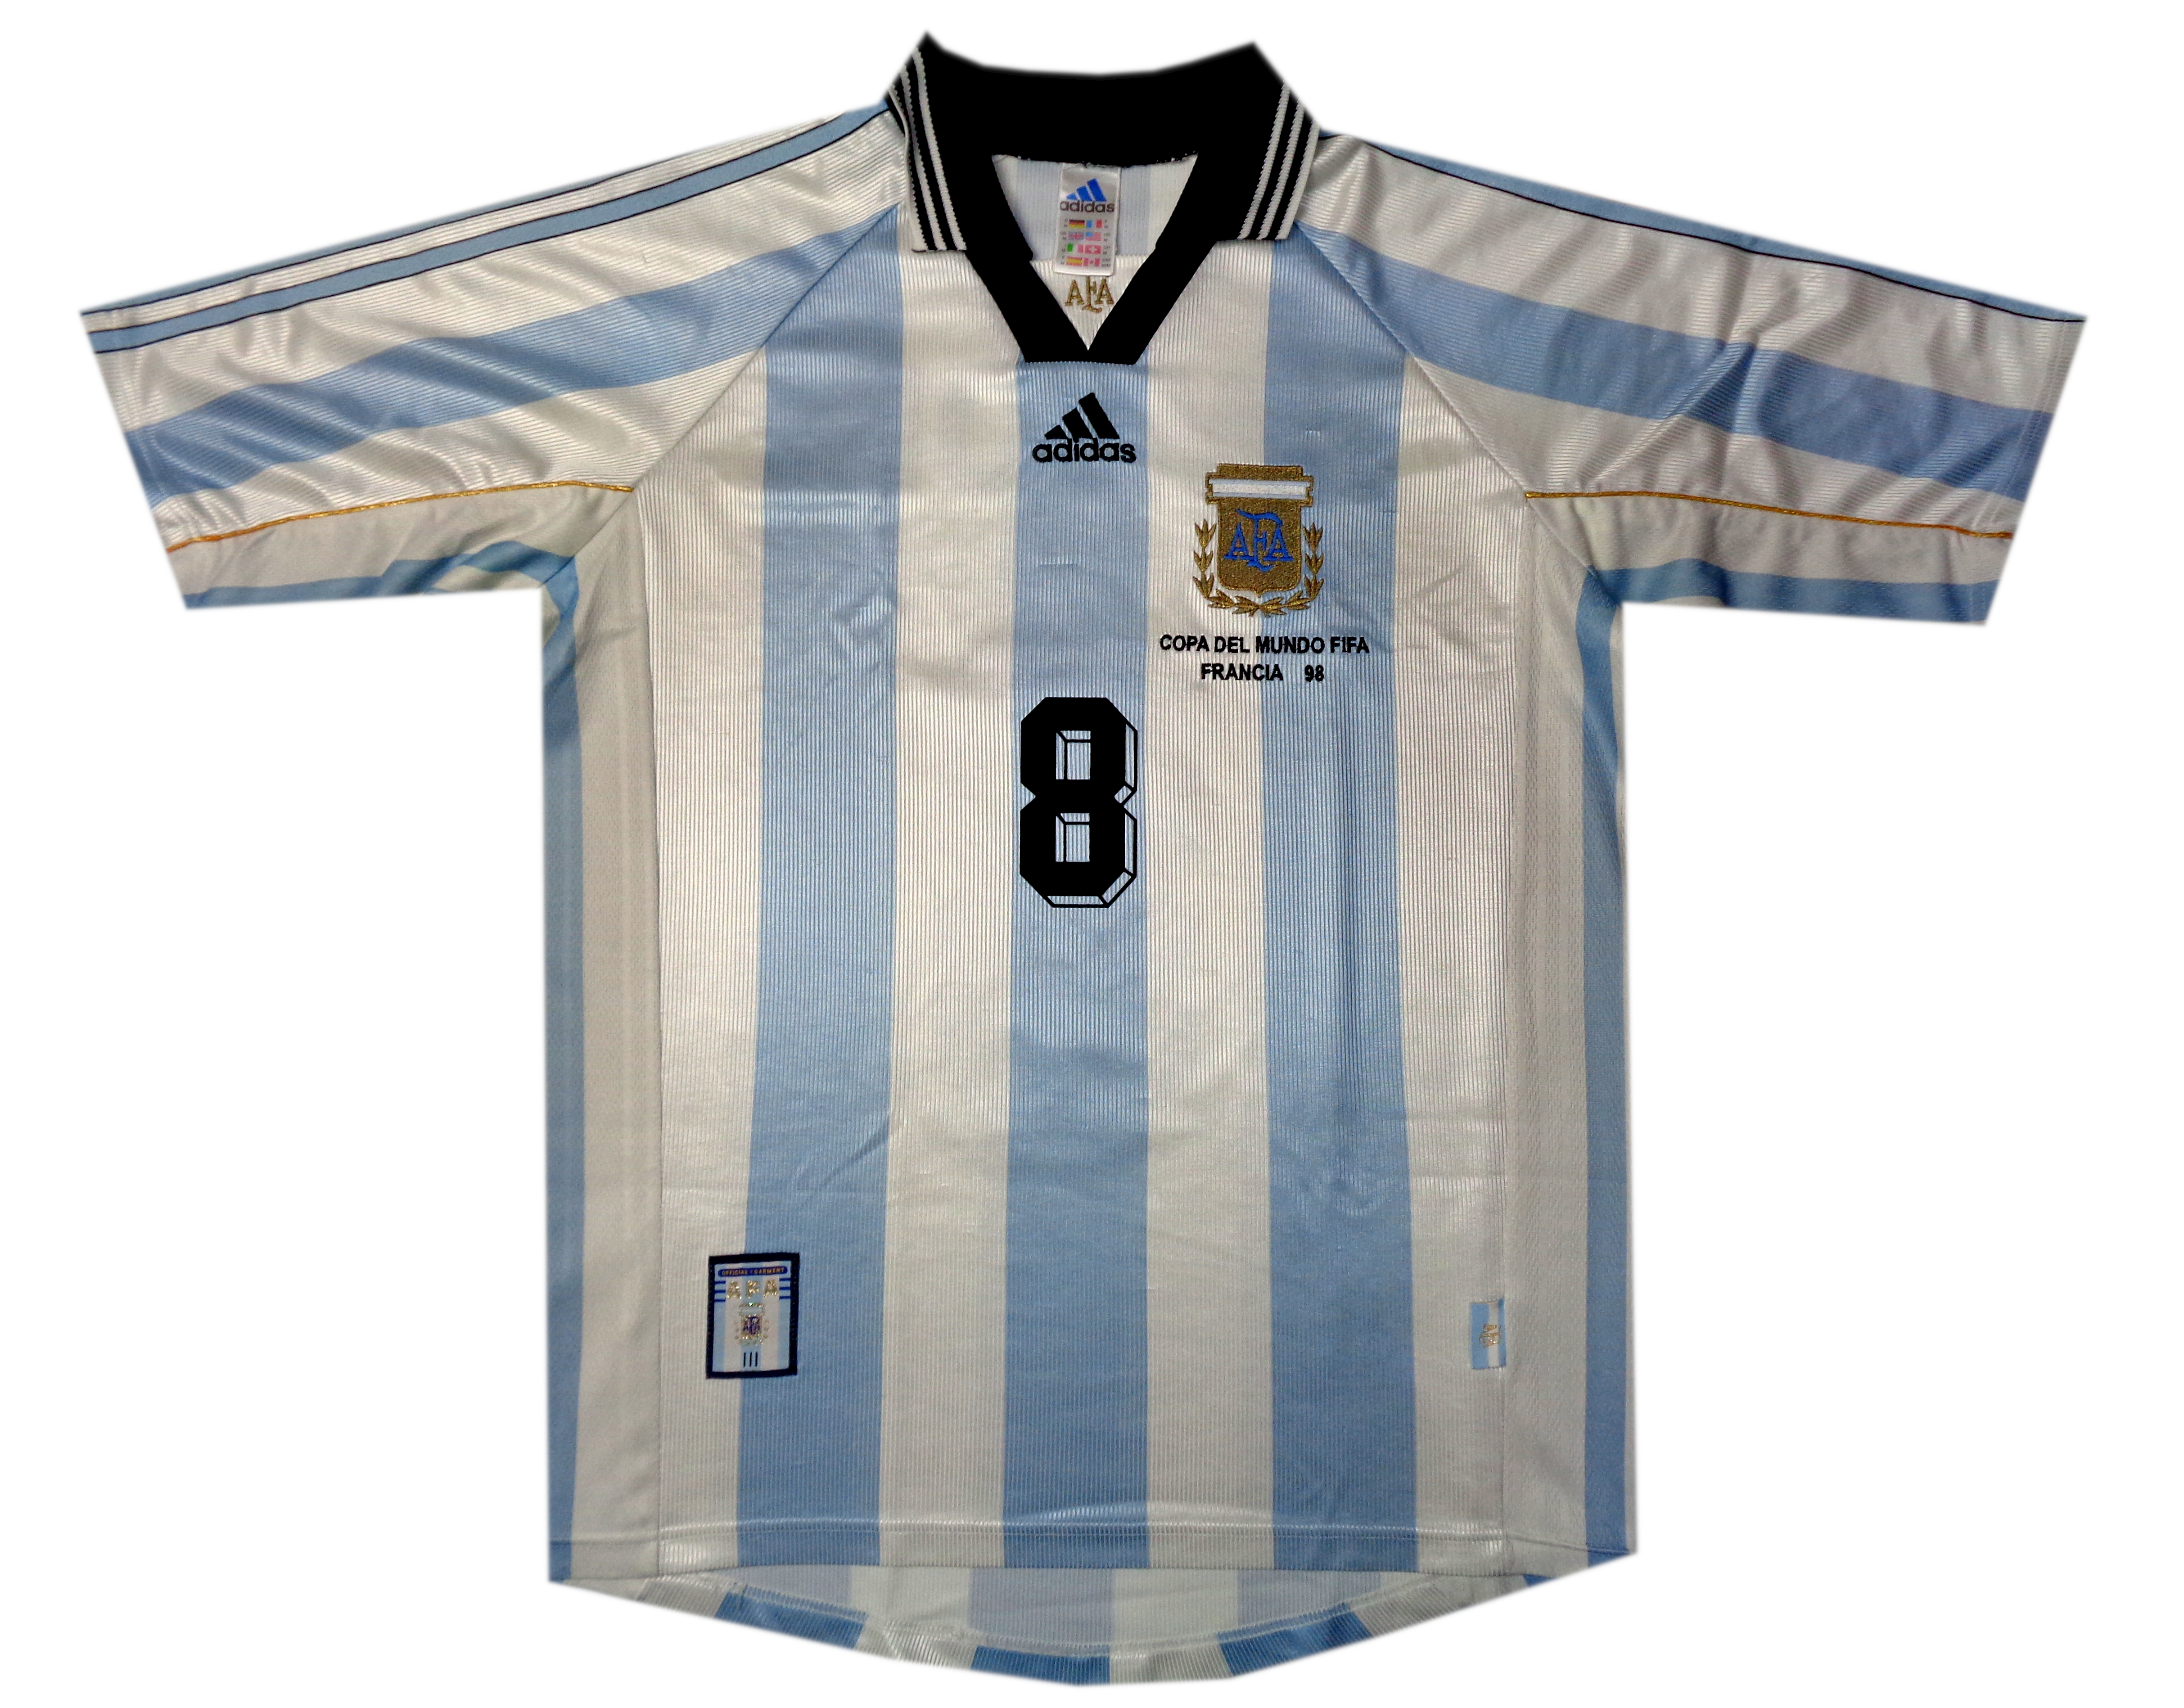 SIMEONE #8 - ARGENTINA 1998 WORLD CUP SHIRT - ADIDAS - SIZE MEDIUM